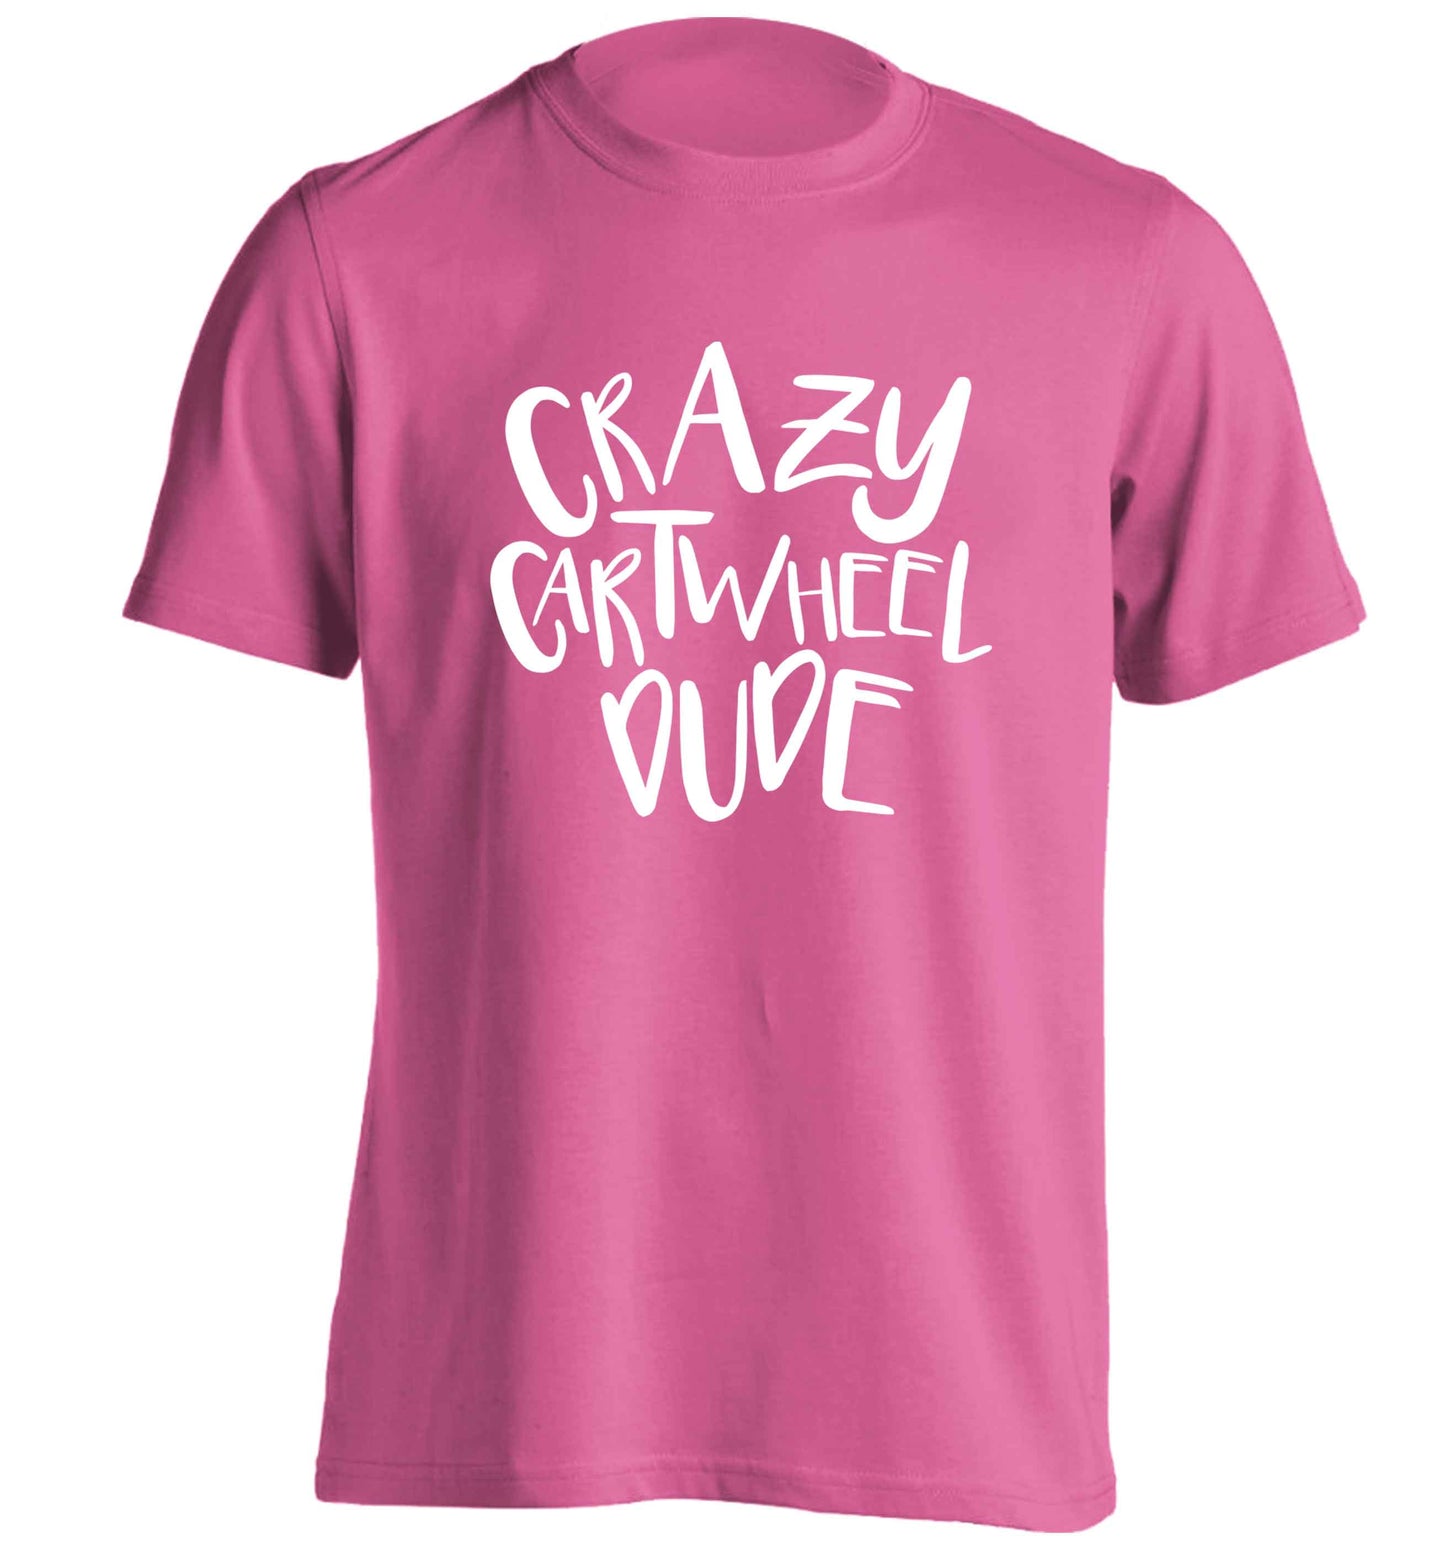 Crazy cartwheel dude adults unisex pink Tshirt 2XL